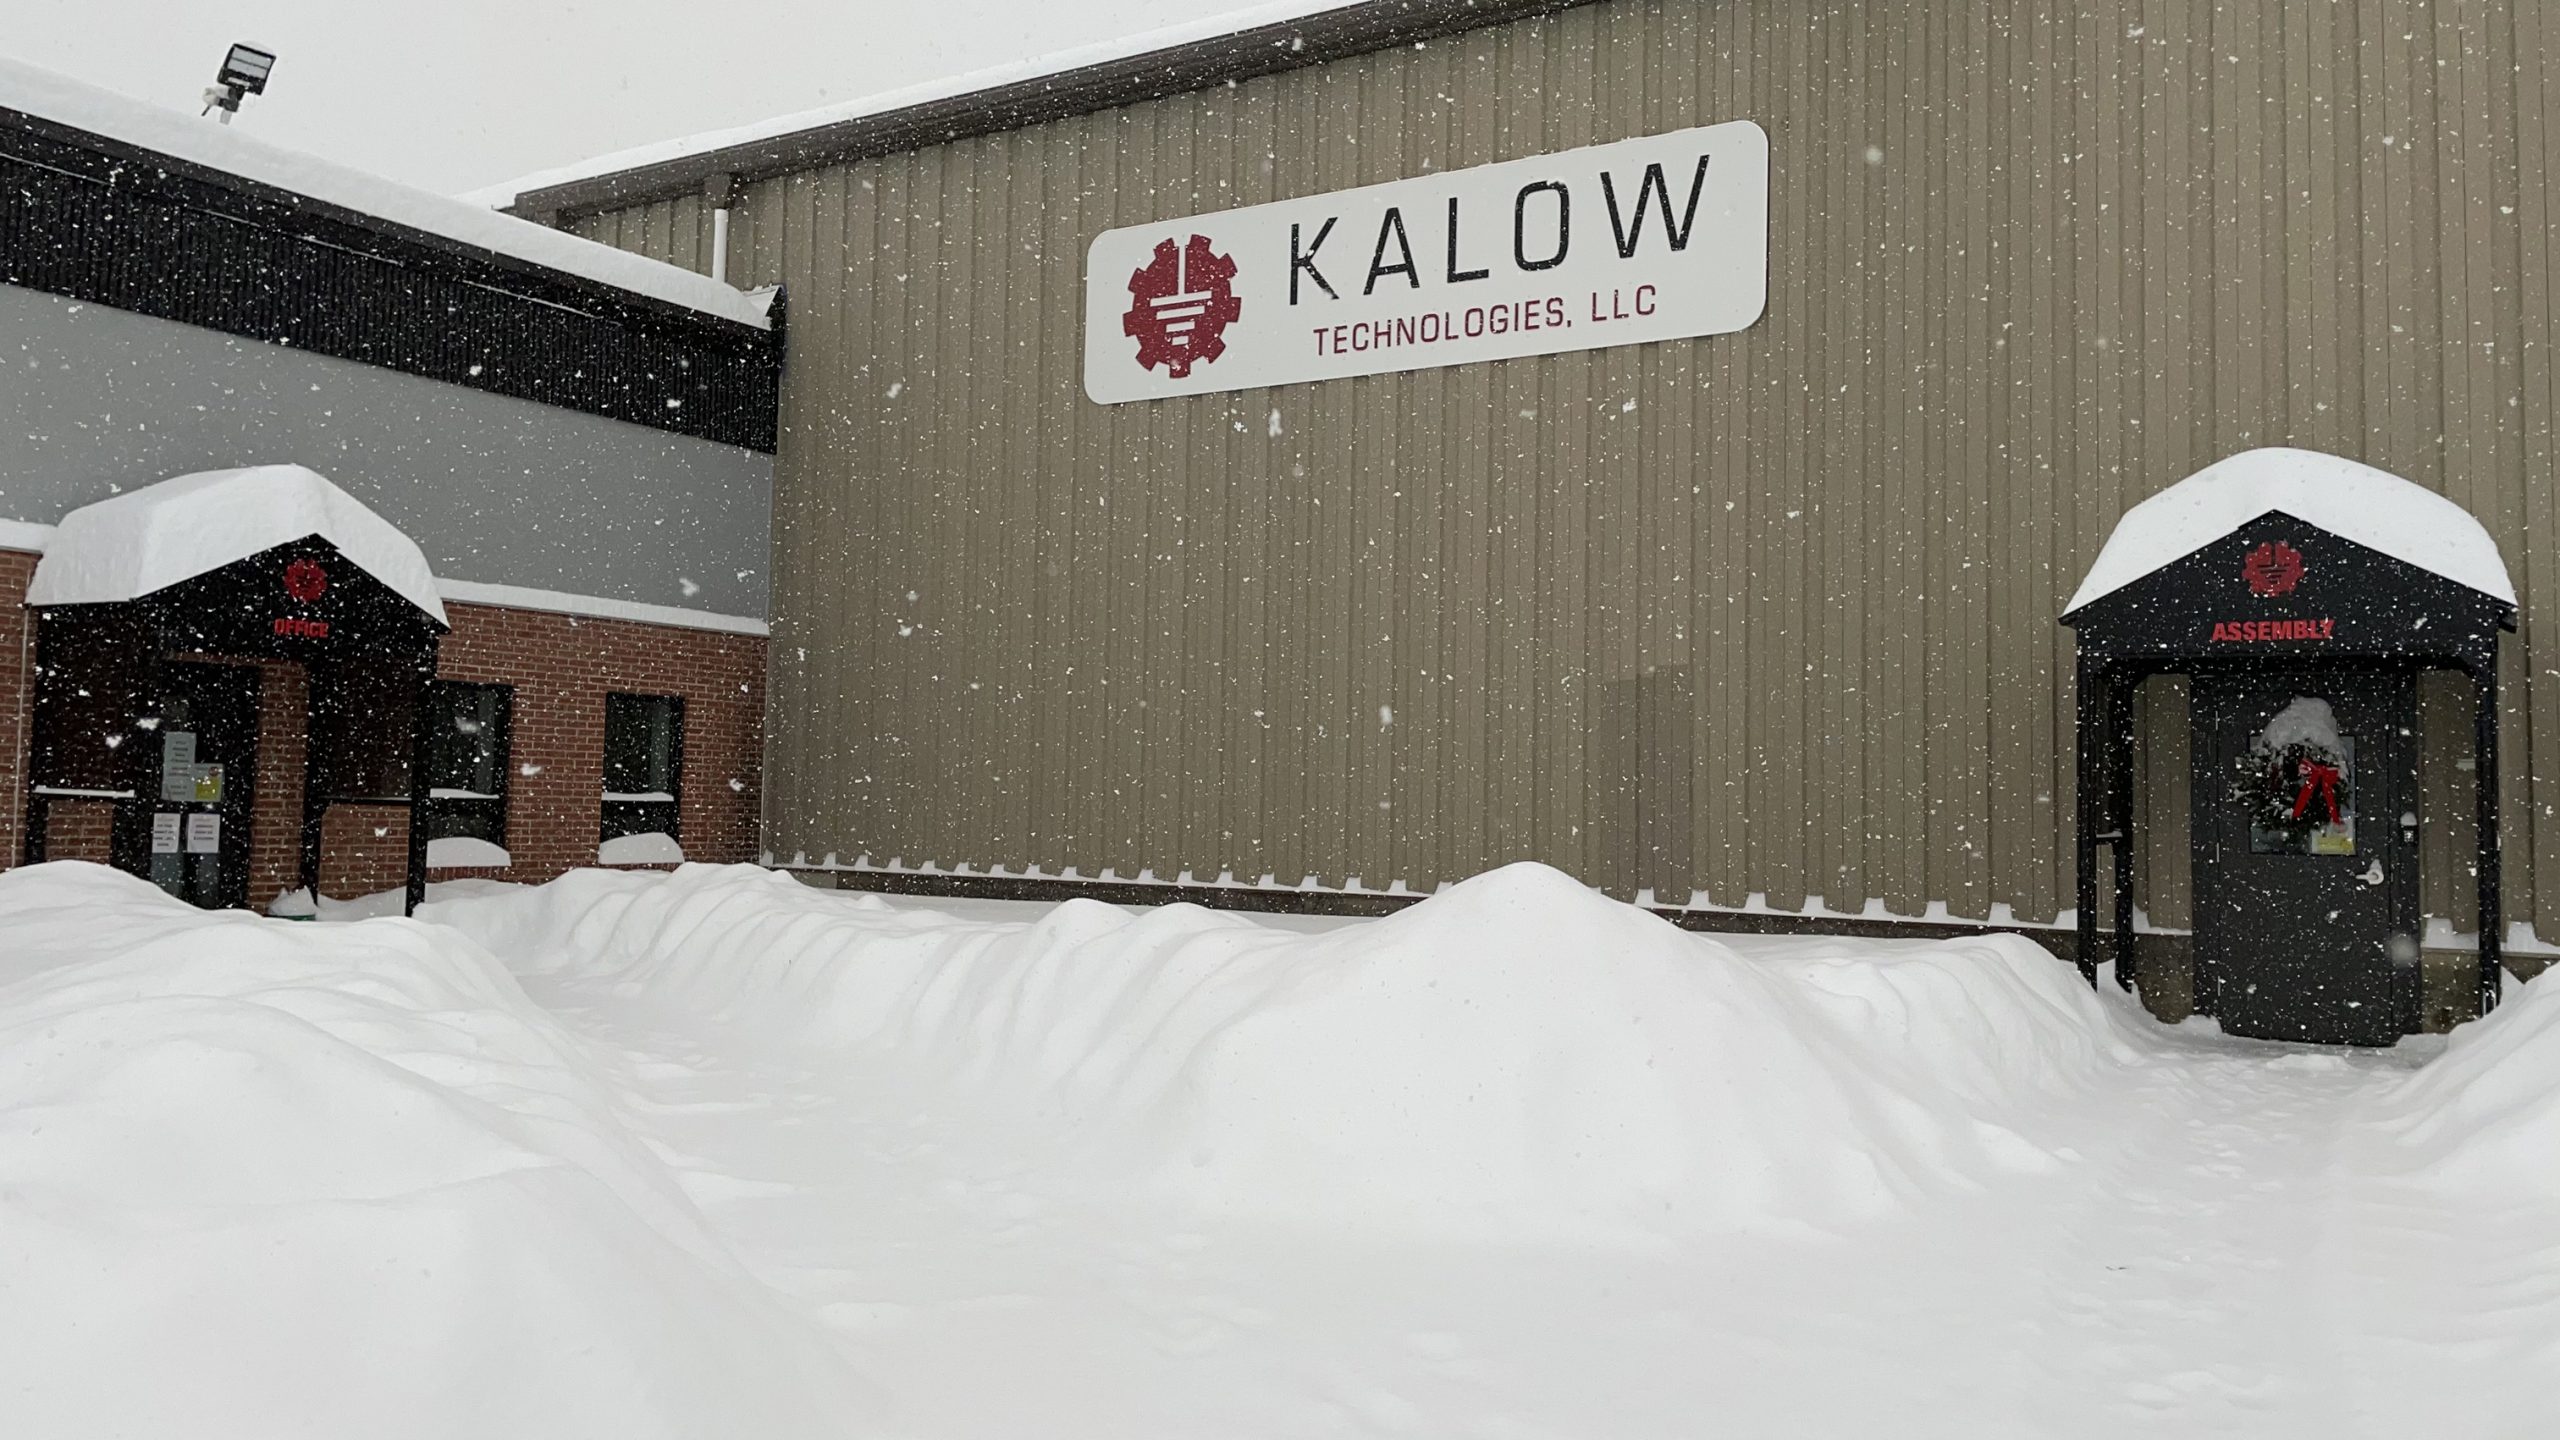 Kalow entrance in snow